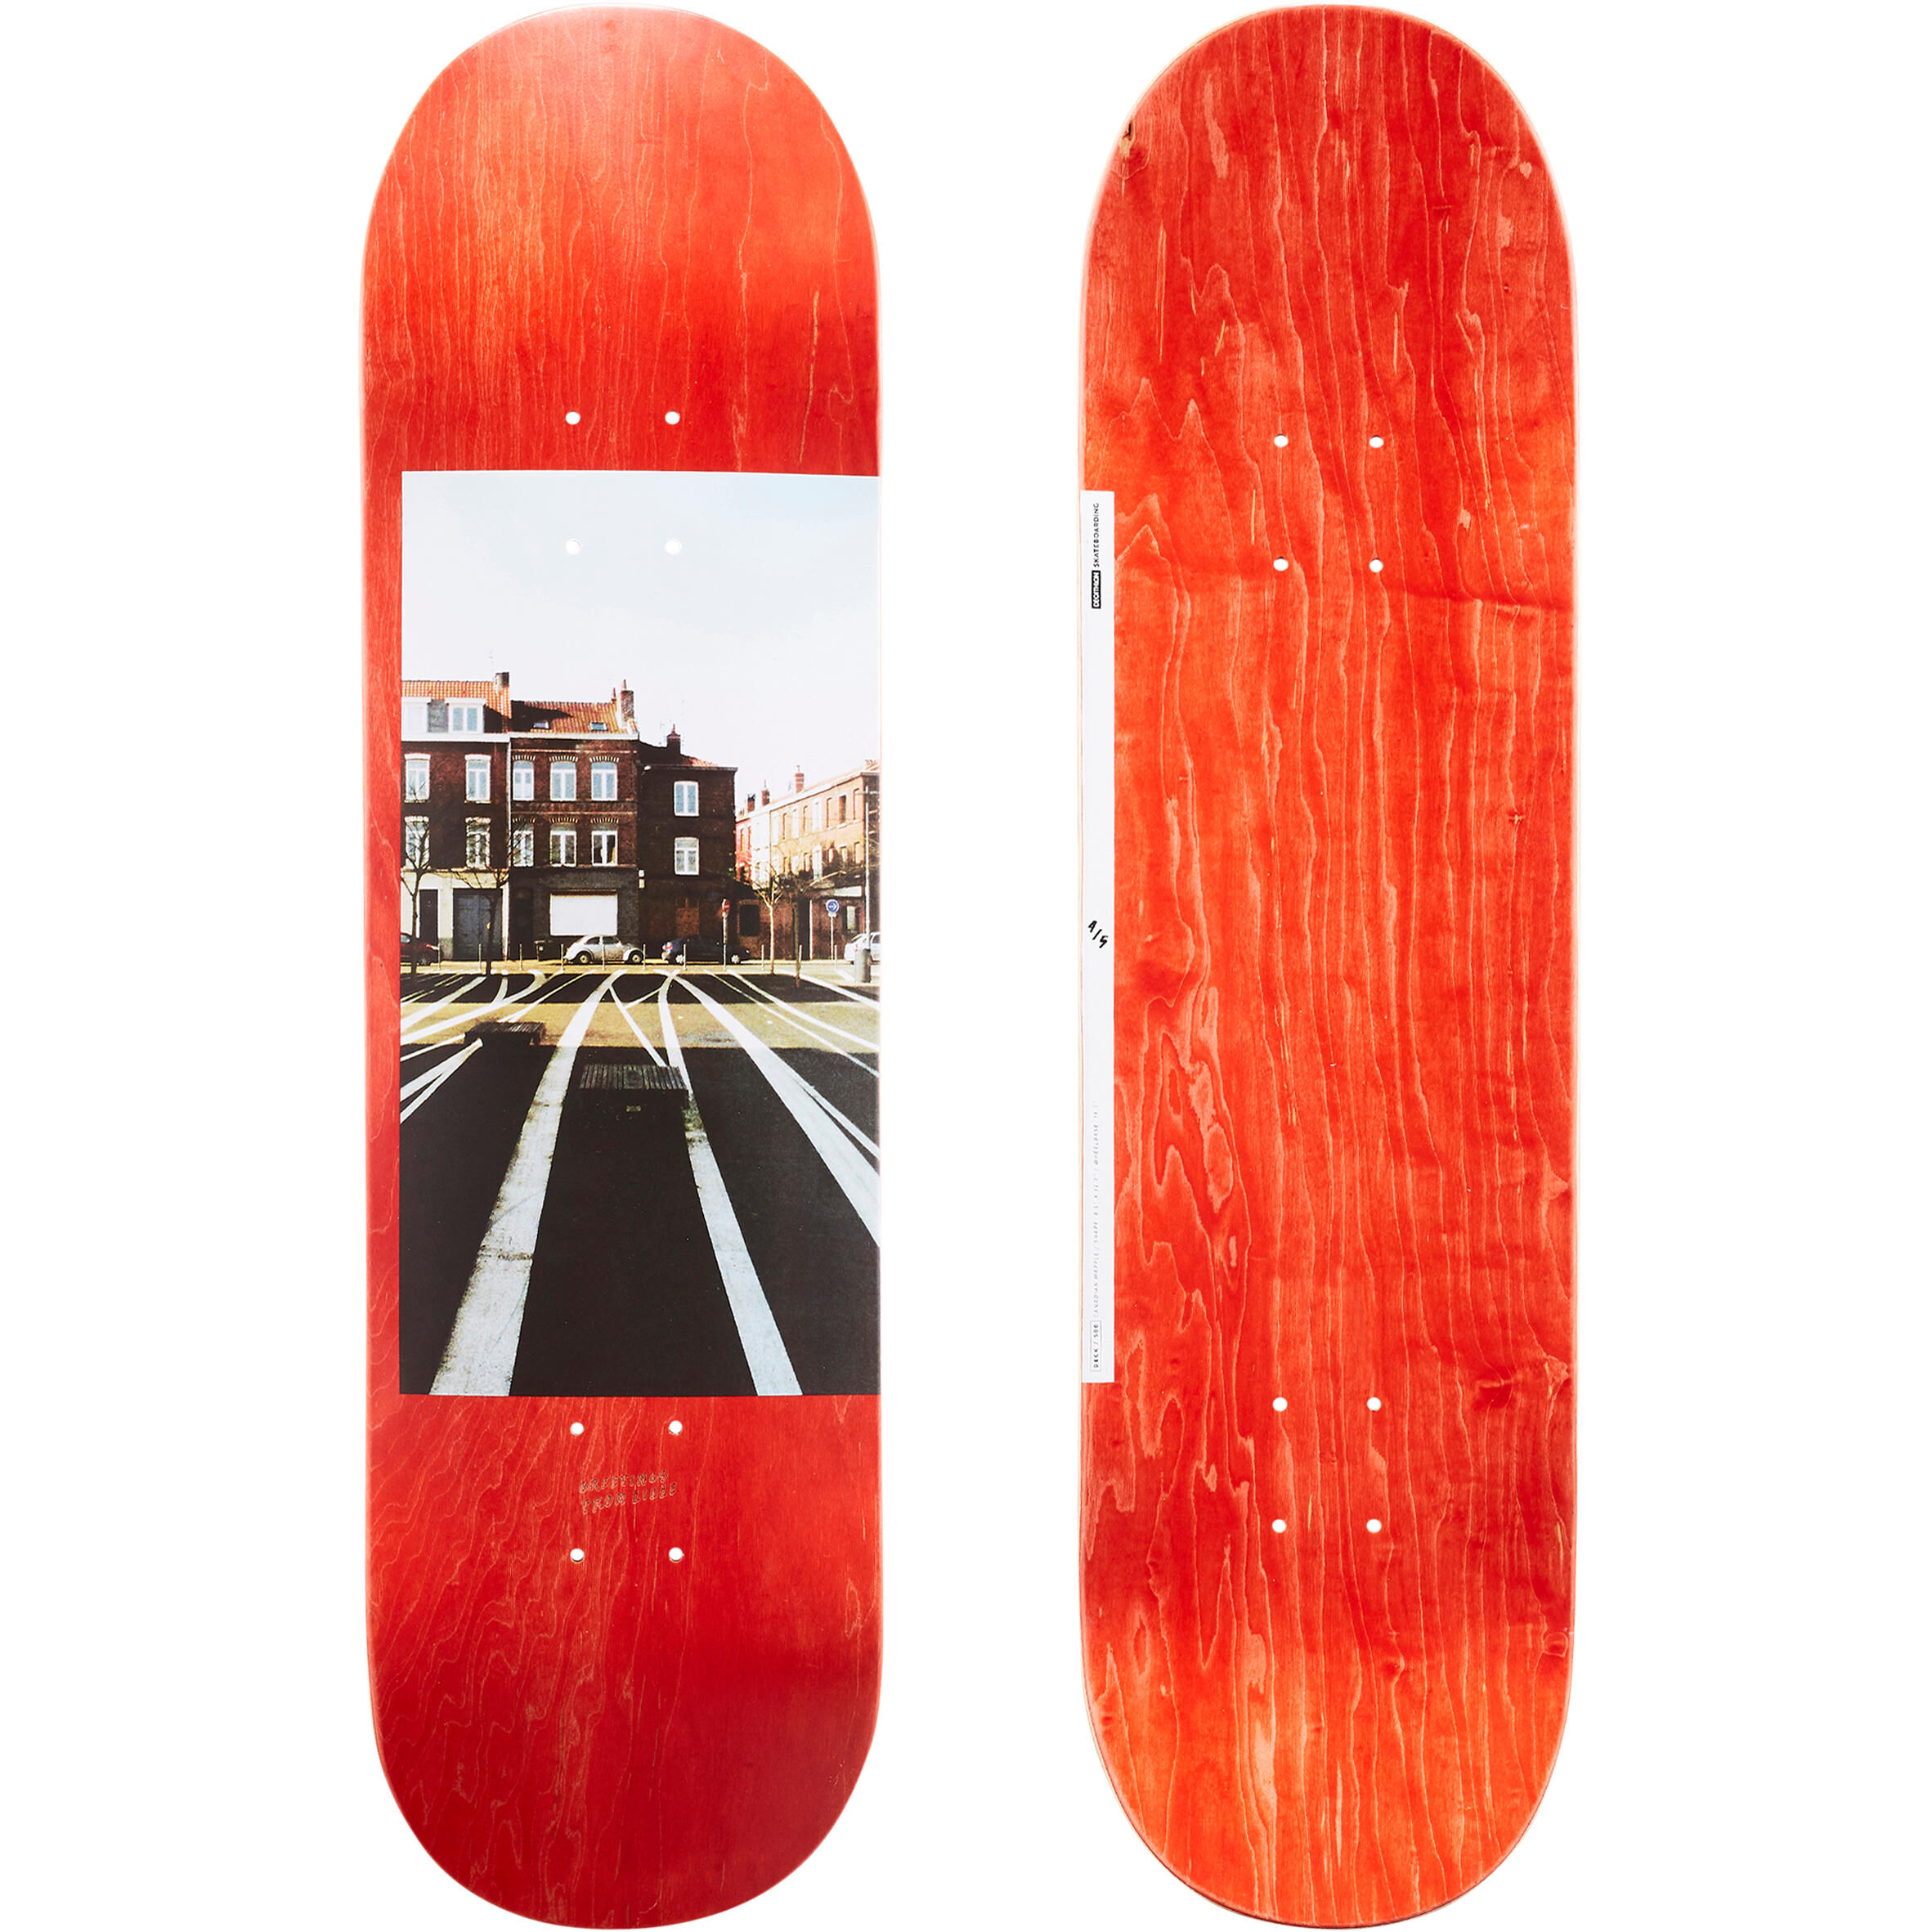 OXELO Maple Skateboard Deck Greetings DK120 8.5" - Red